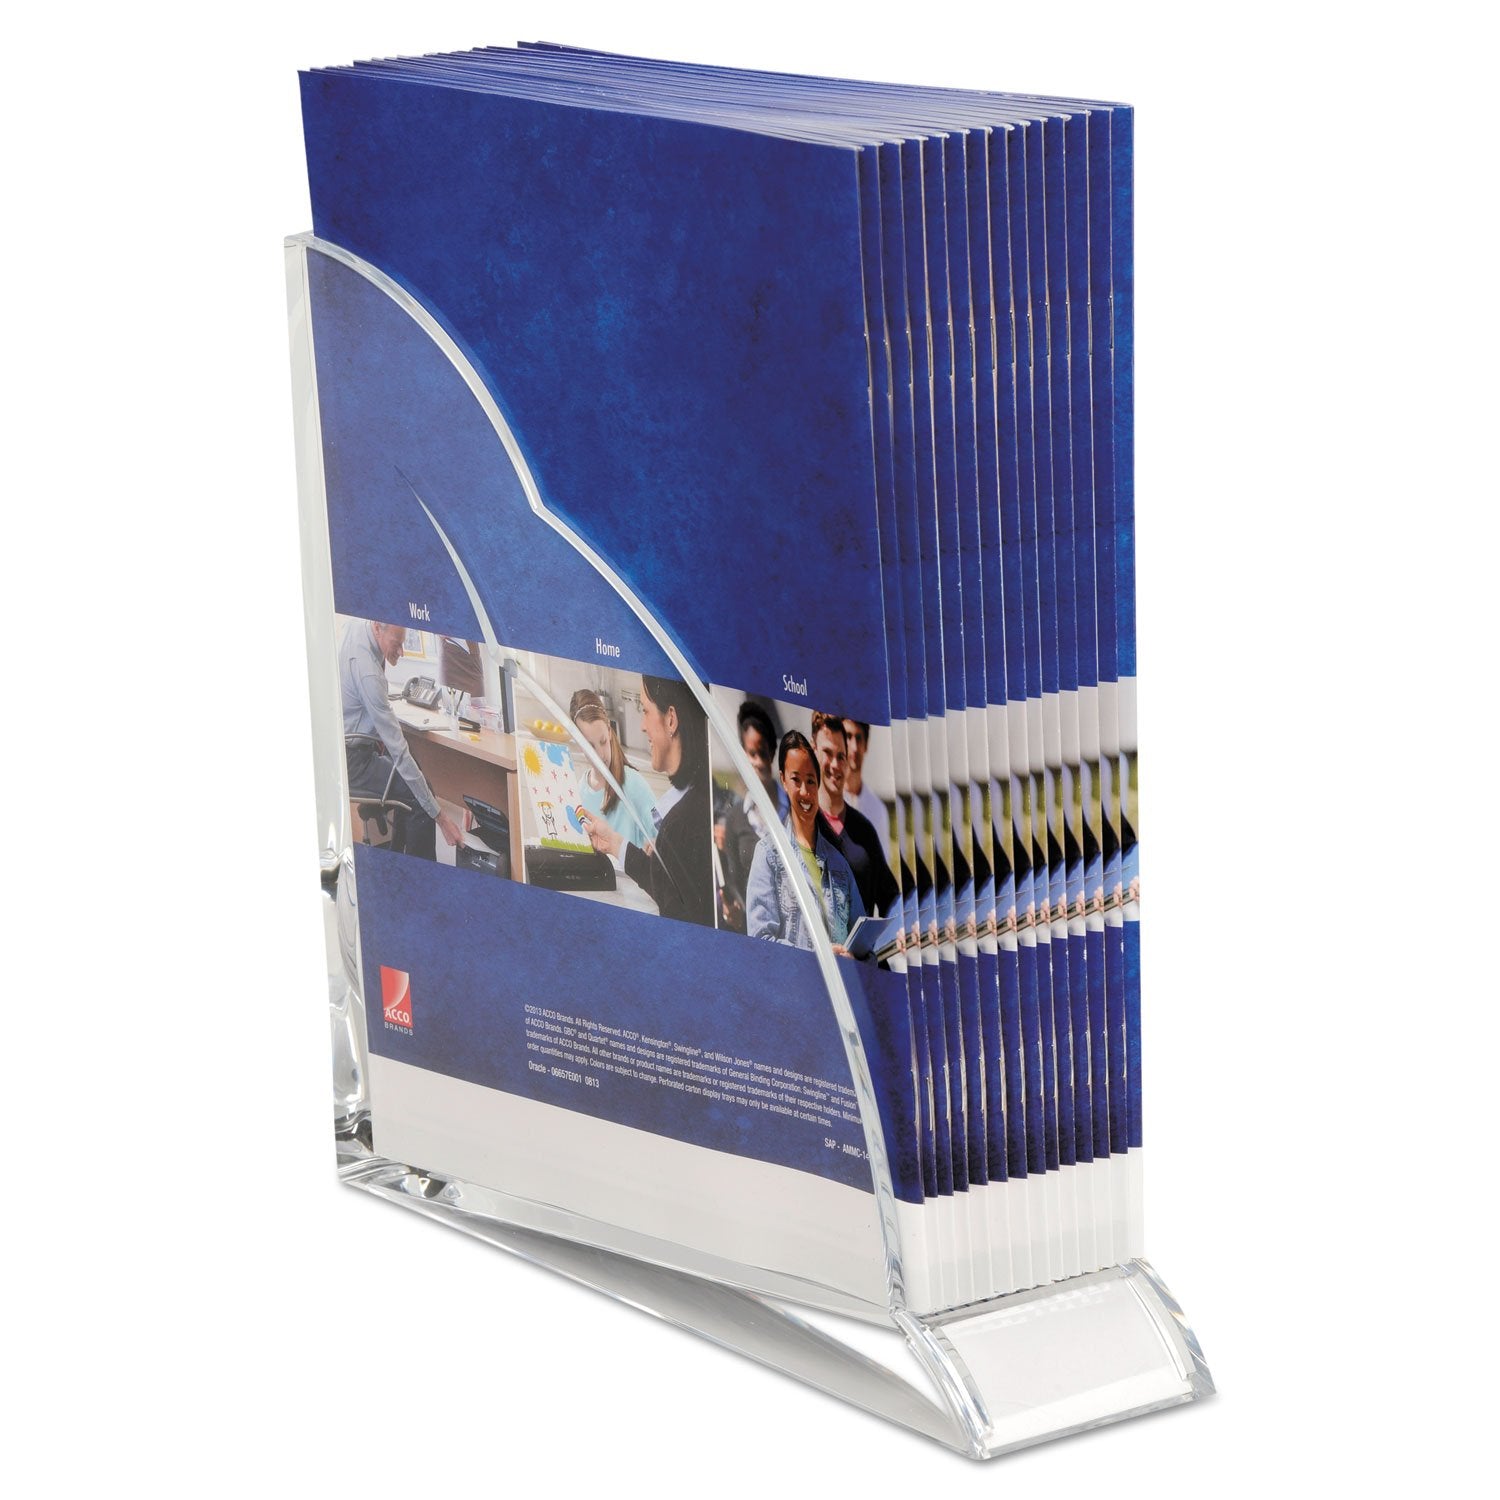 Office A4 Paper File Tray Desk Accessories Magazine Holder